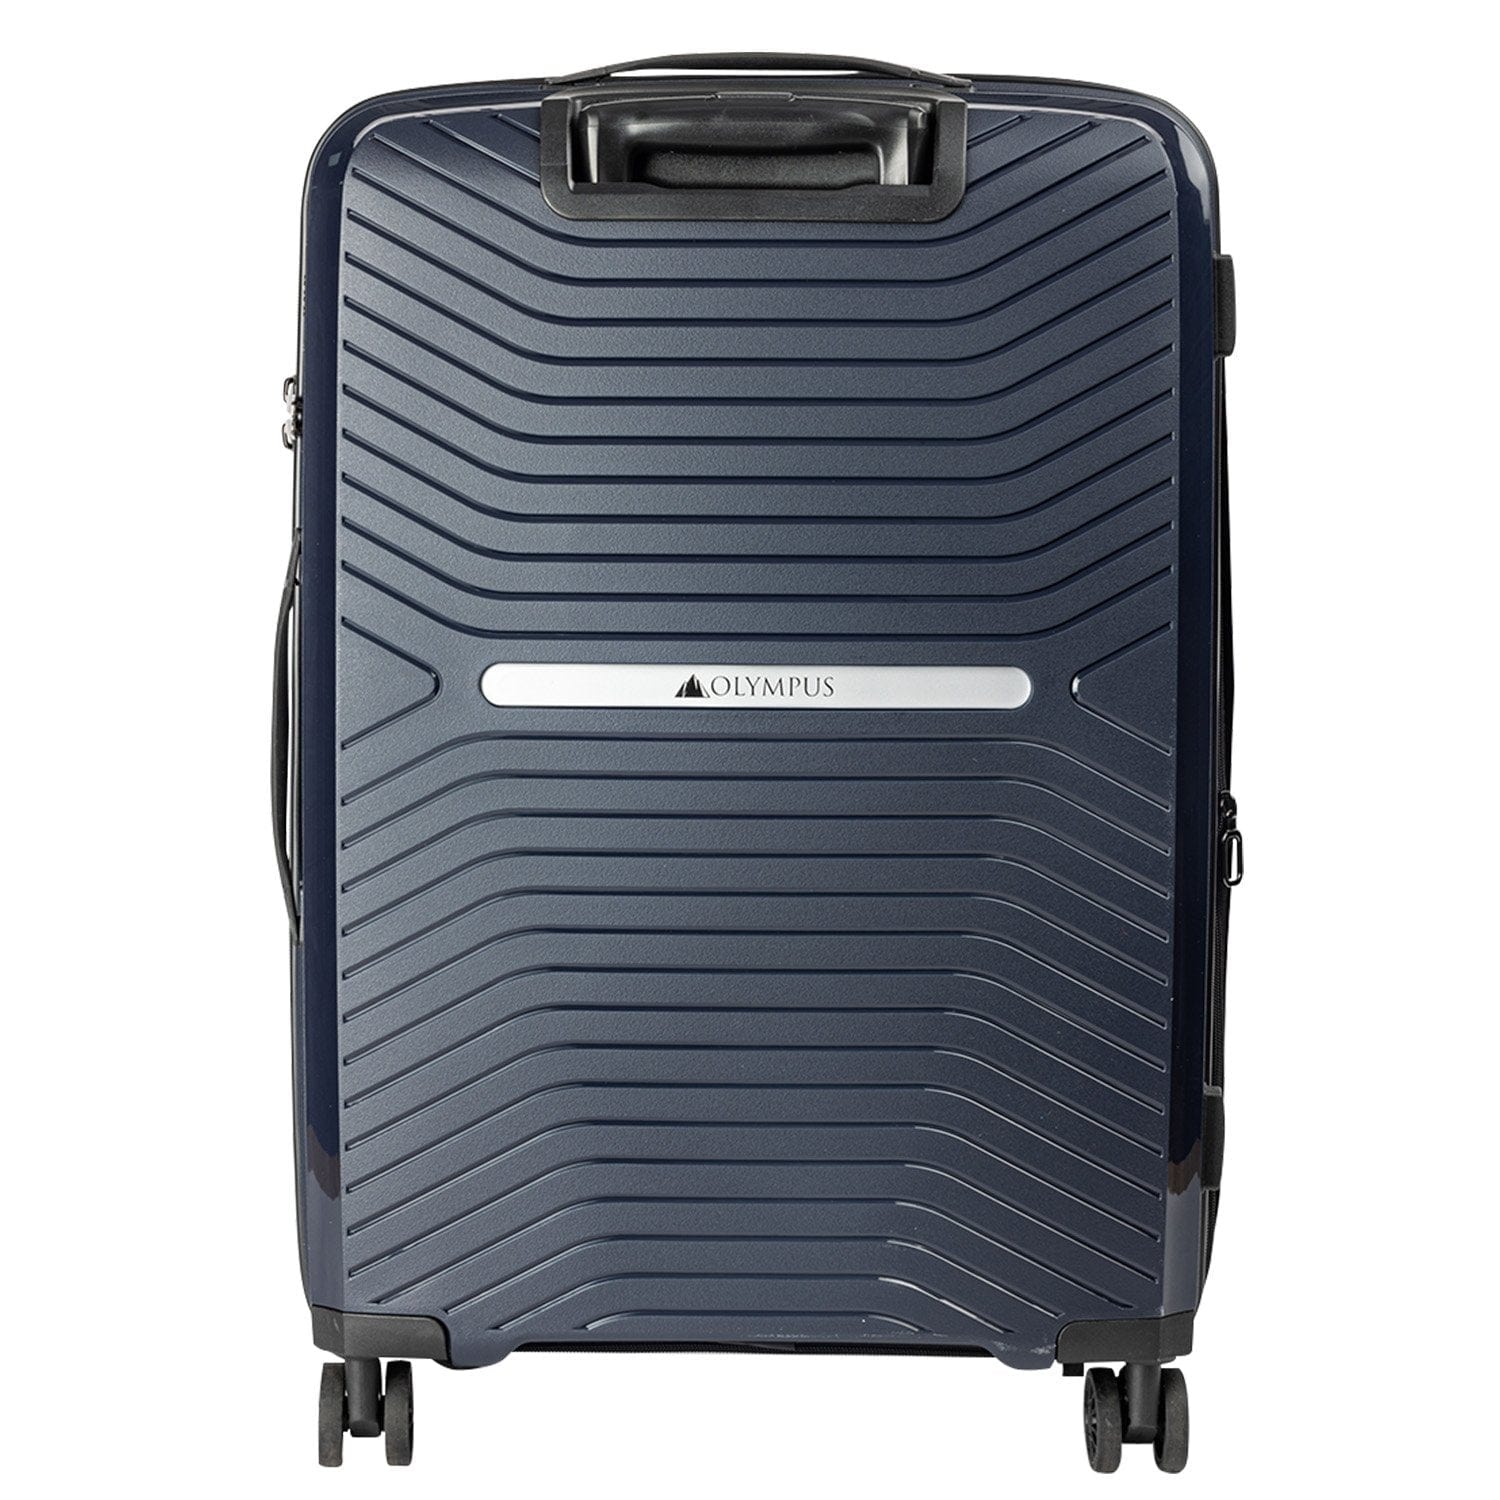 3PC Astra Luggage Set Hard Shell Suitcase - Aegean Blue